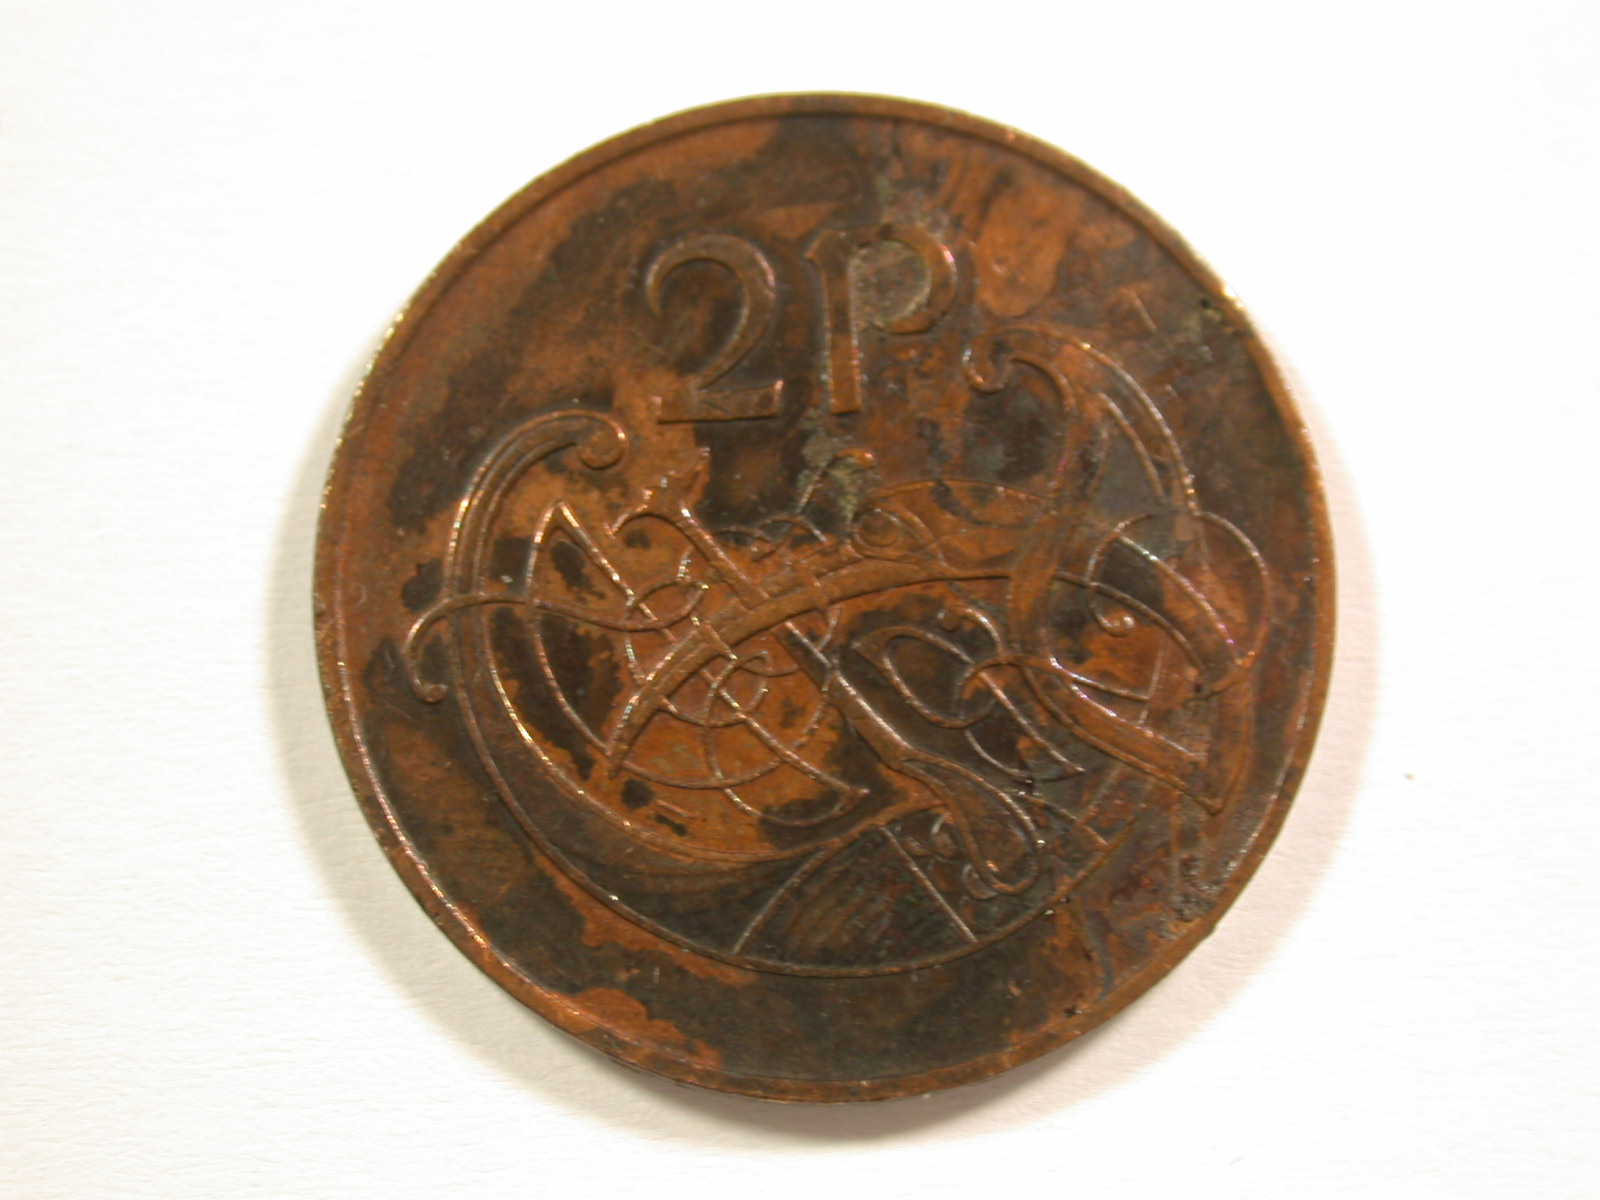  15006 Irland  2 Pence 1971 Orginalbilder   